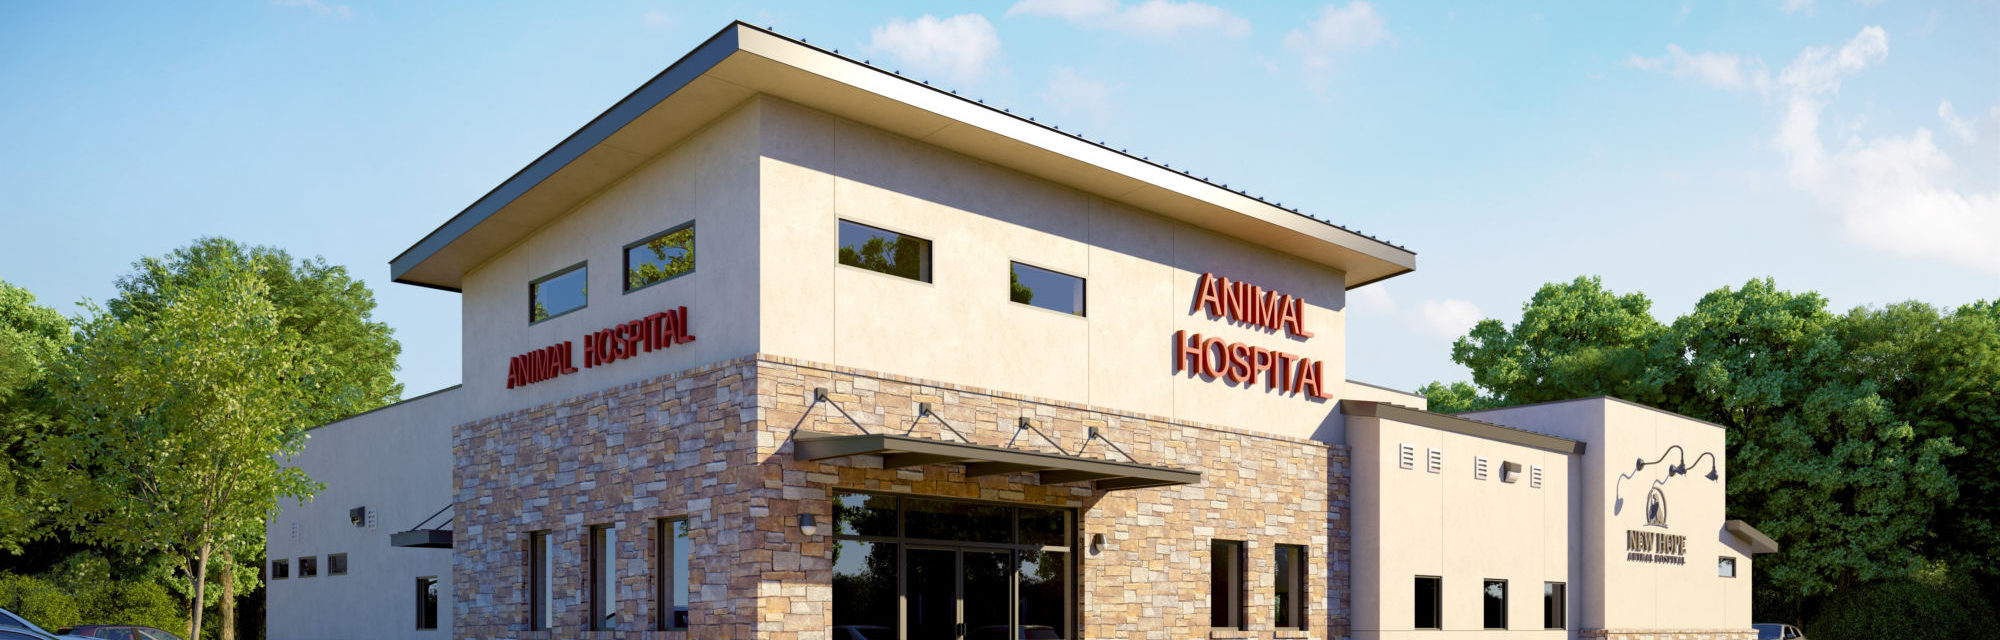 Timber Ridge Animal Hospital | Huffman Builders